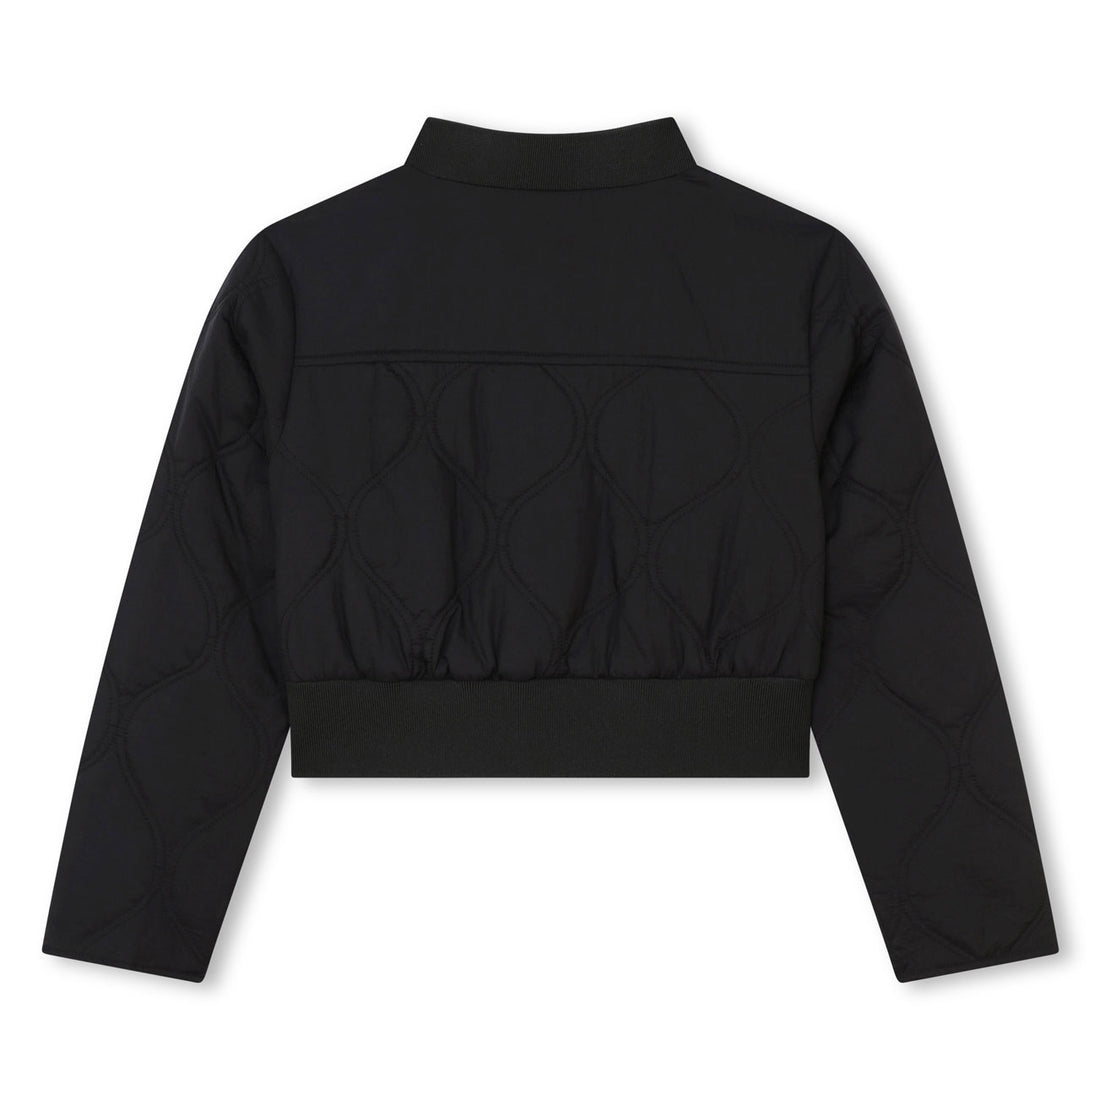 DKNY Black Quilt Pattern Jacket